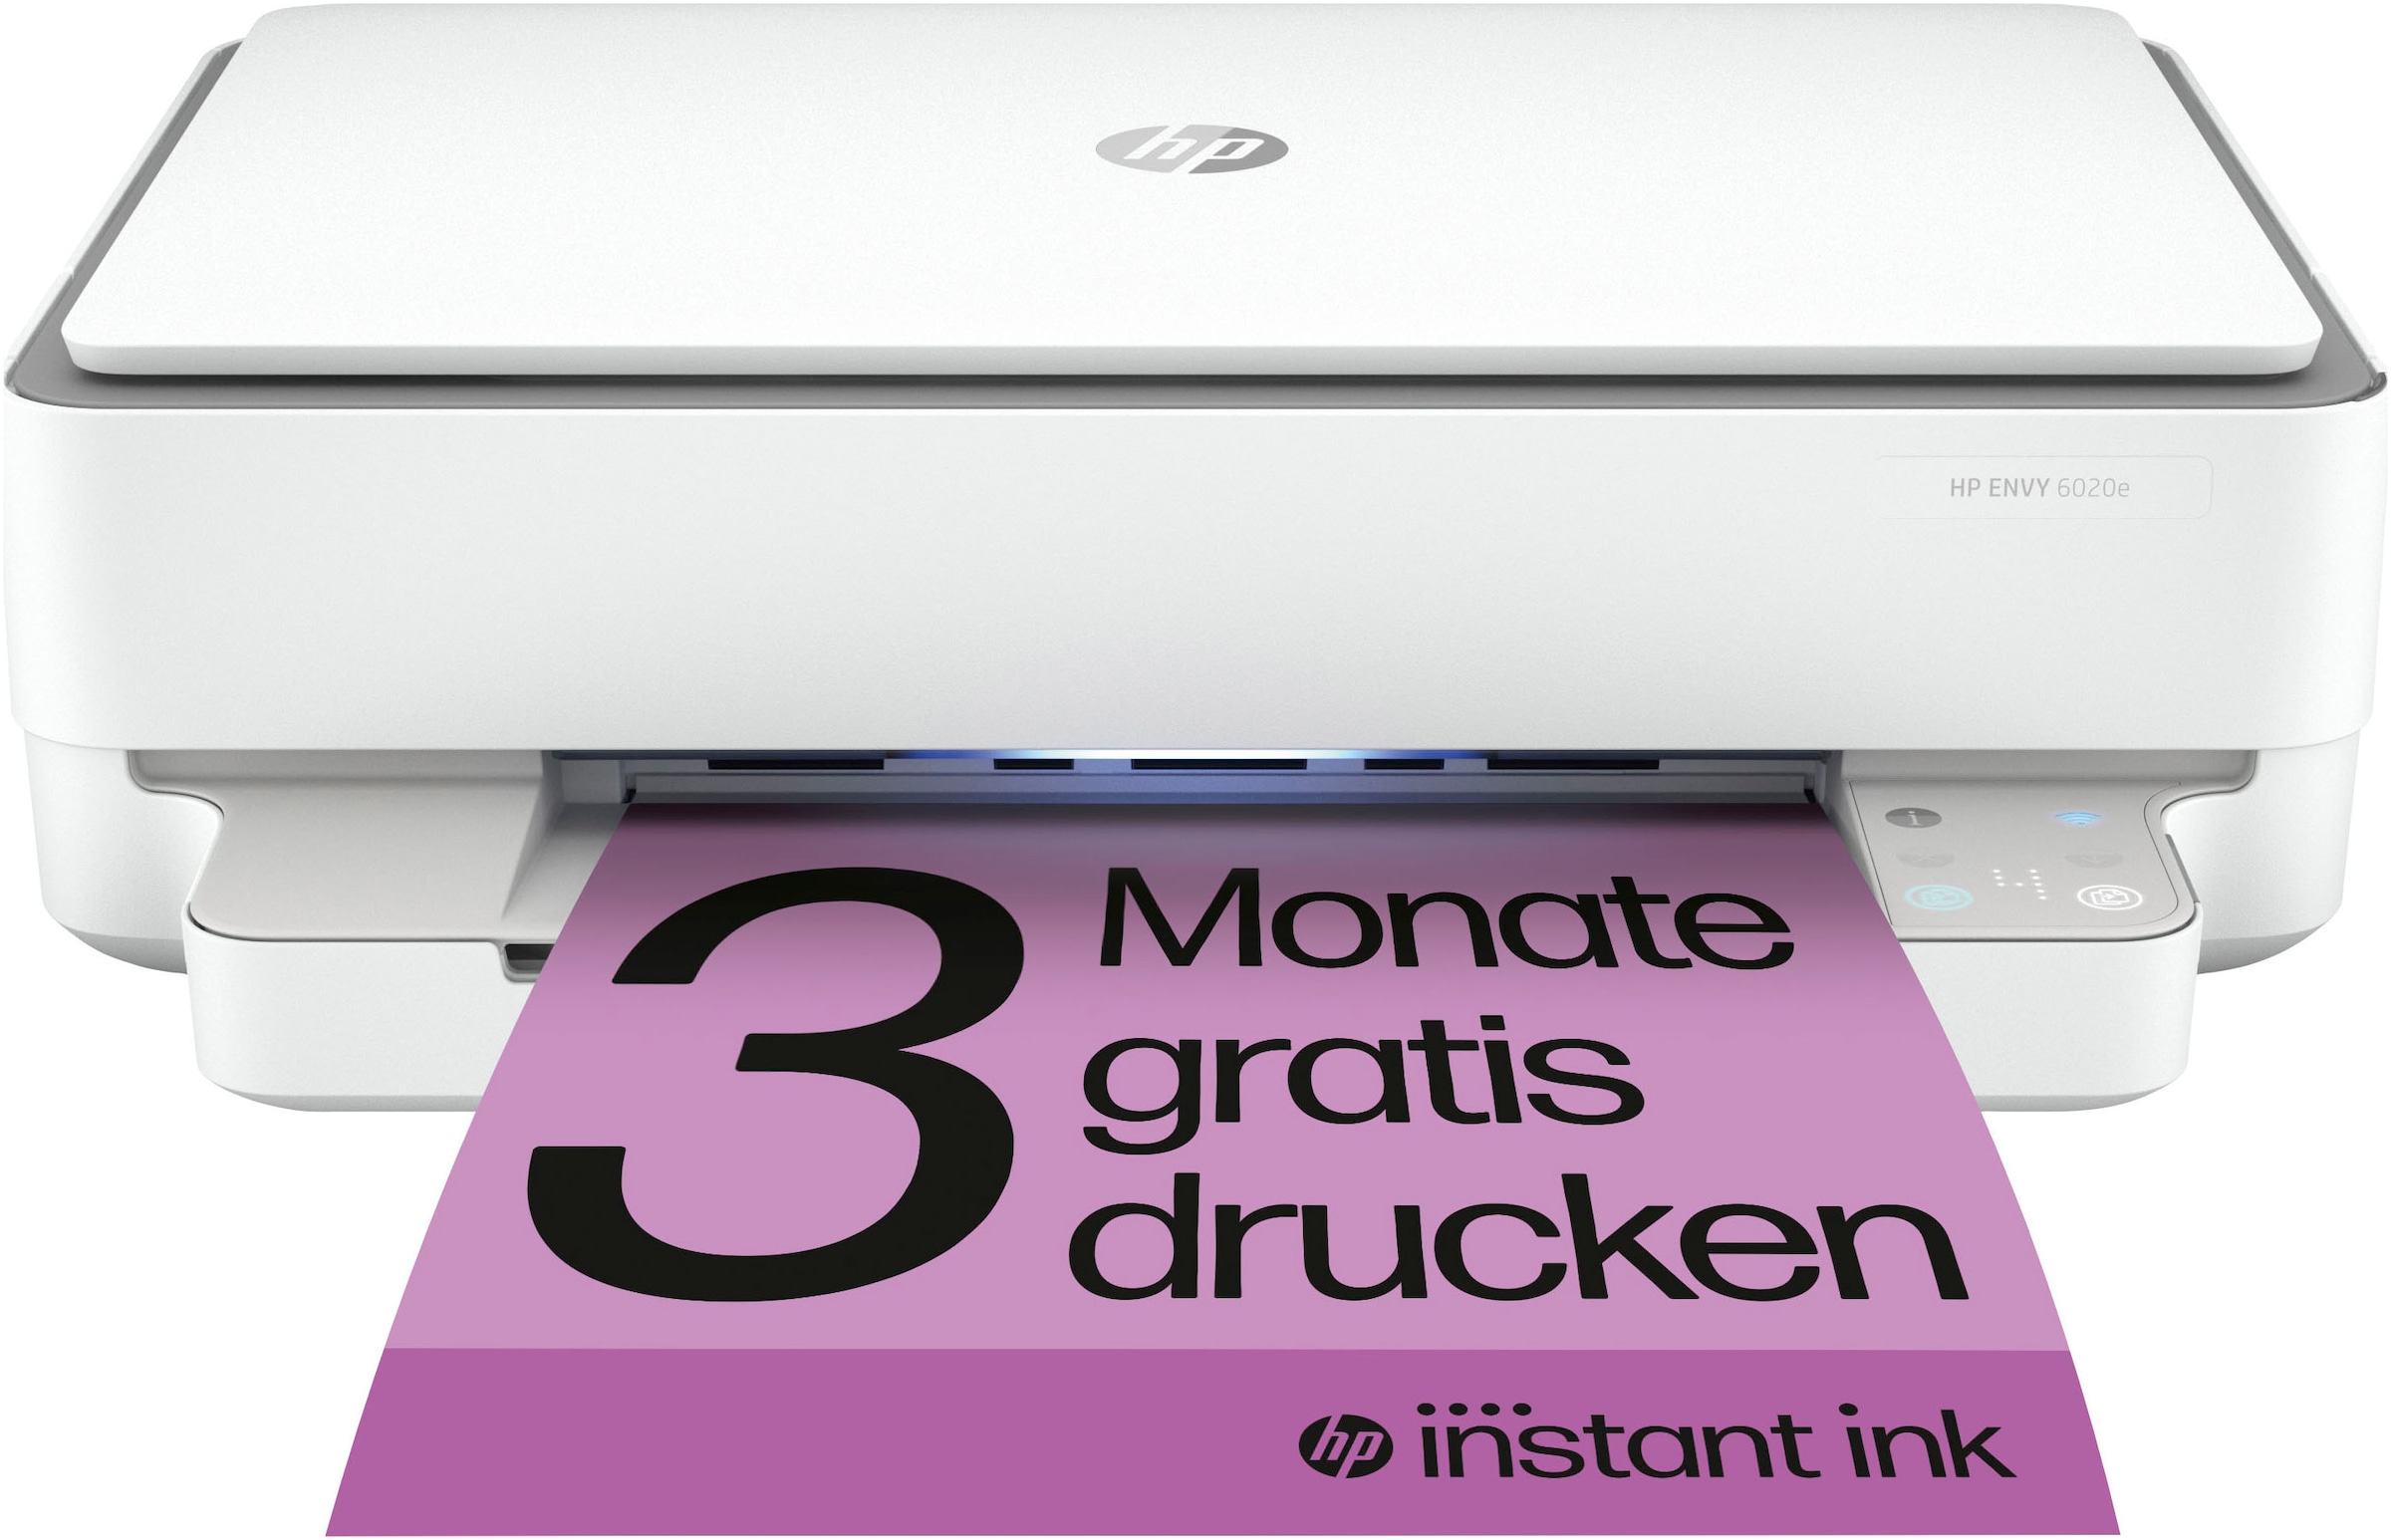 Multifunktionsdrucker »ENVY 6020e«, 3 Monate gratis Drucken mit HP Instant Ink inklusive